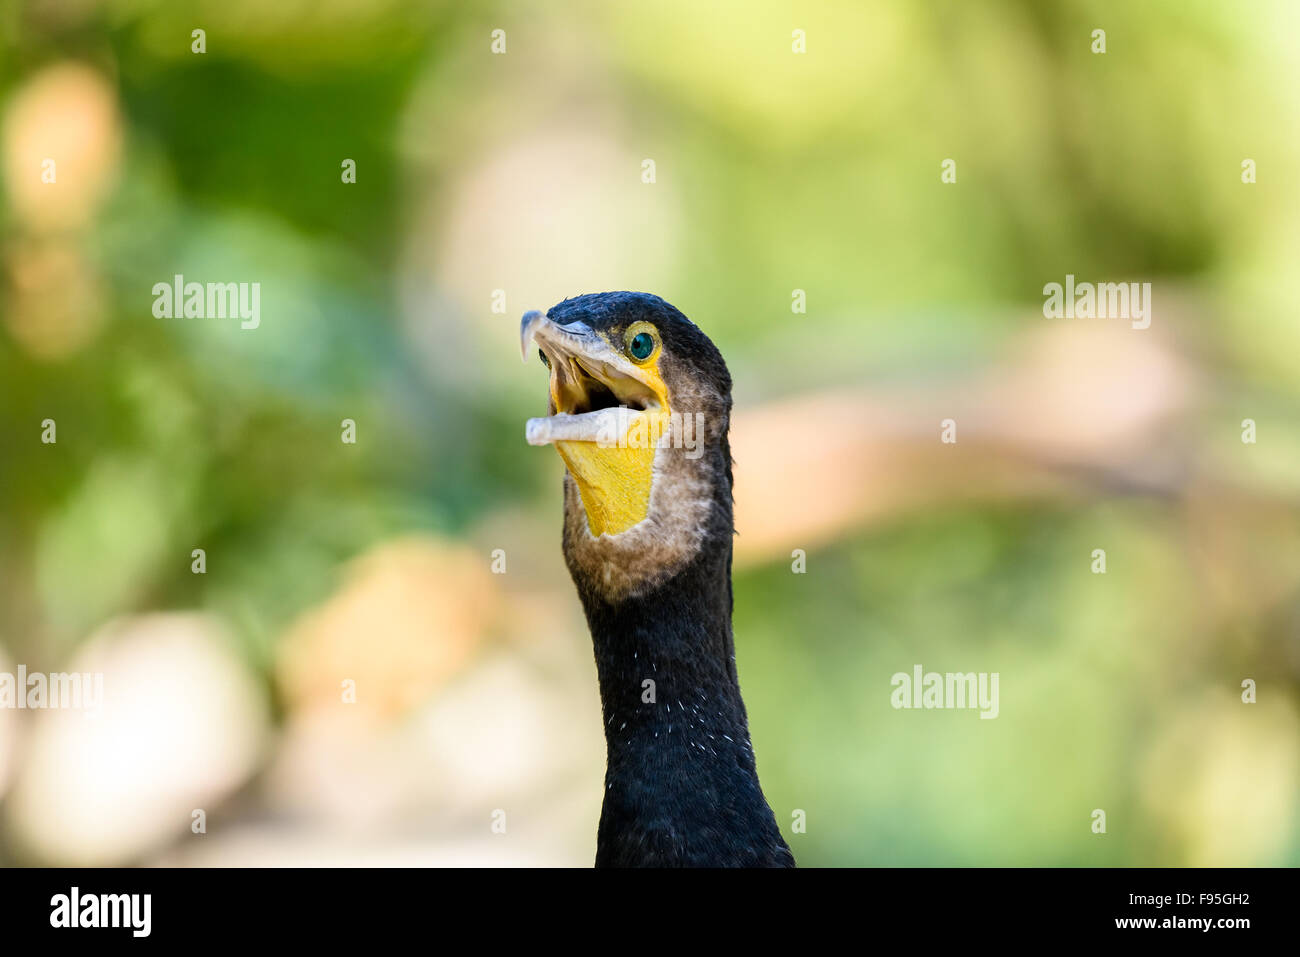 Black Cormorant Sea Bird Portrait Stock Photo